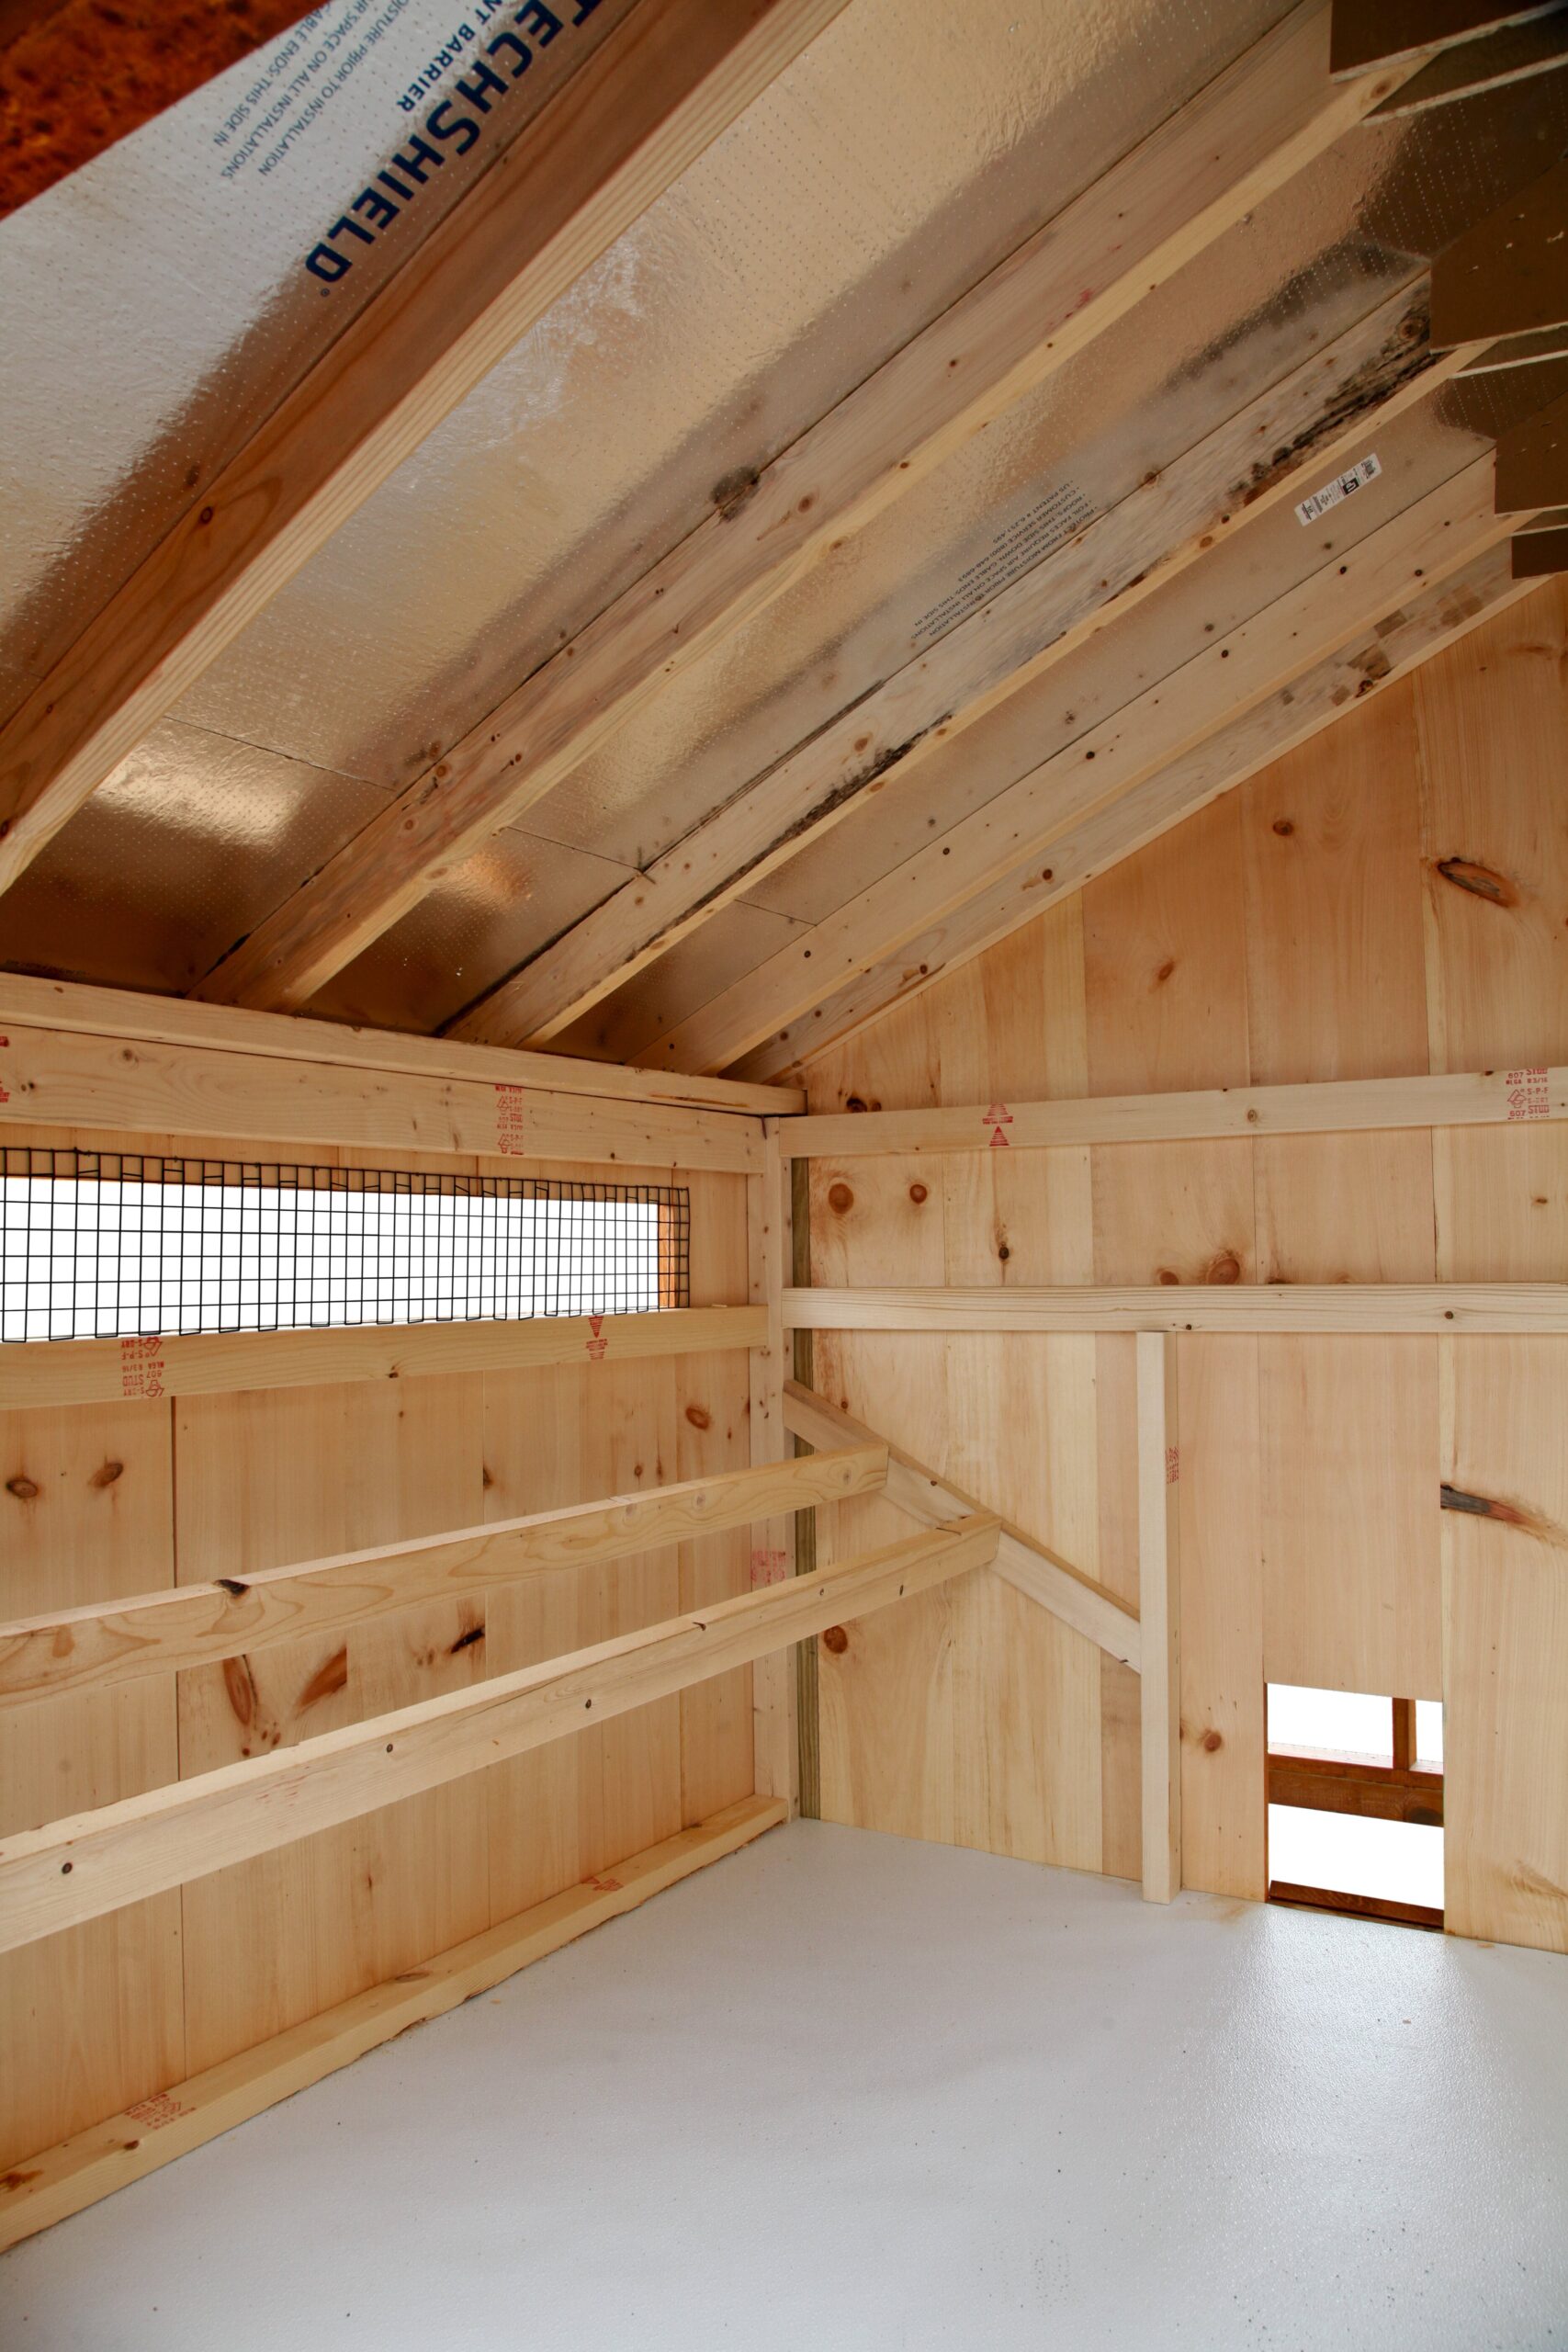 Interior of a 6x12 Quaker Combination chicken coop